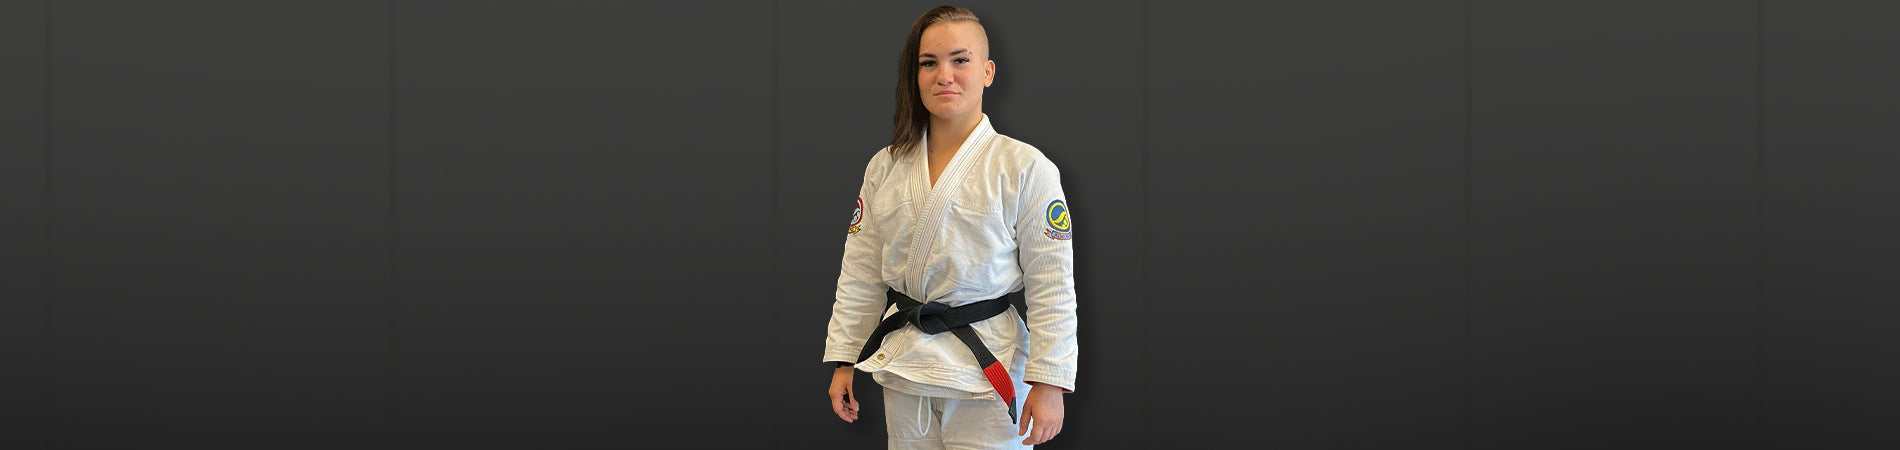 Elisabeth Clay - Young Prodigy of Jiu-Jitsu